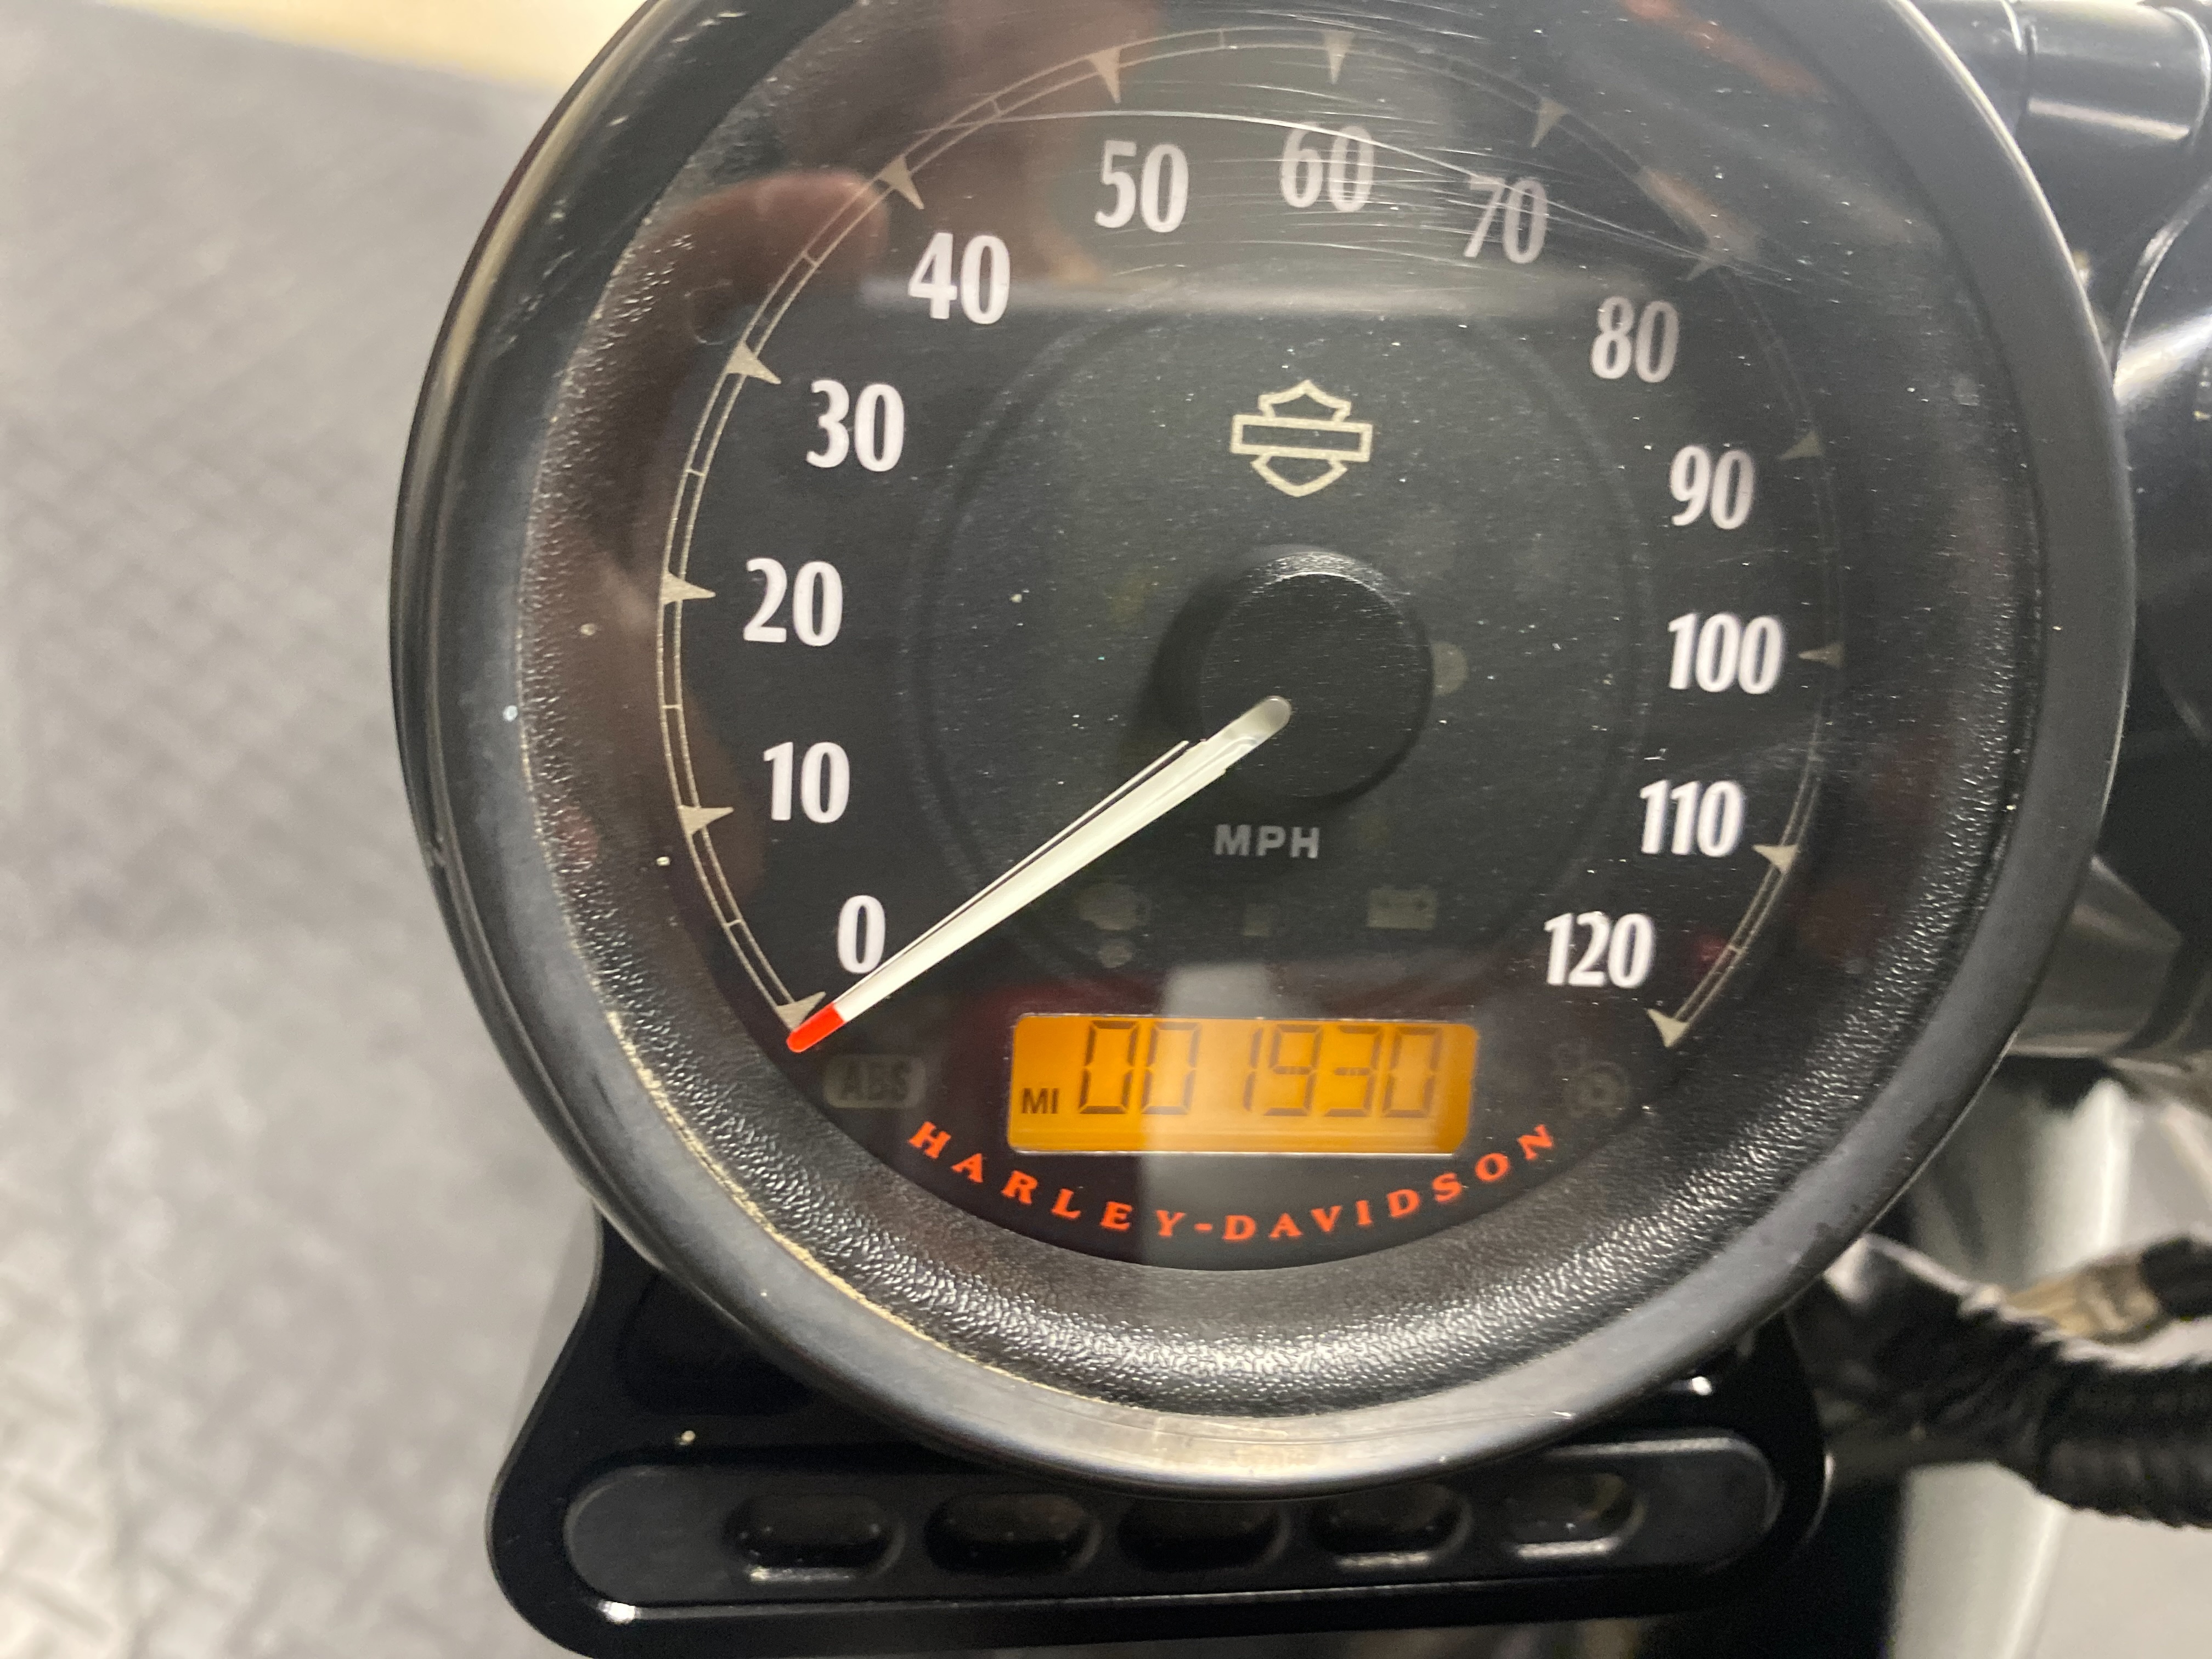 2019 Harley-Davidson Sportster Iron 1200 at Cannonball Harley-Davidson